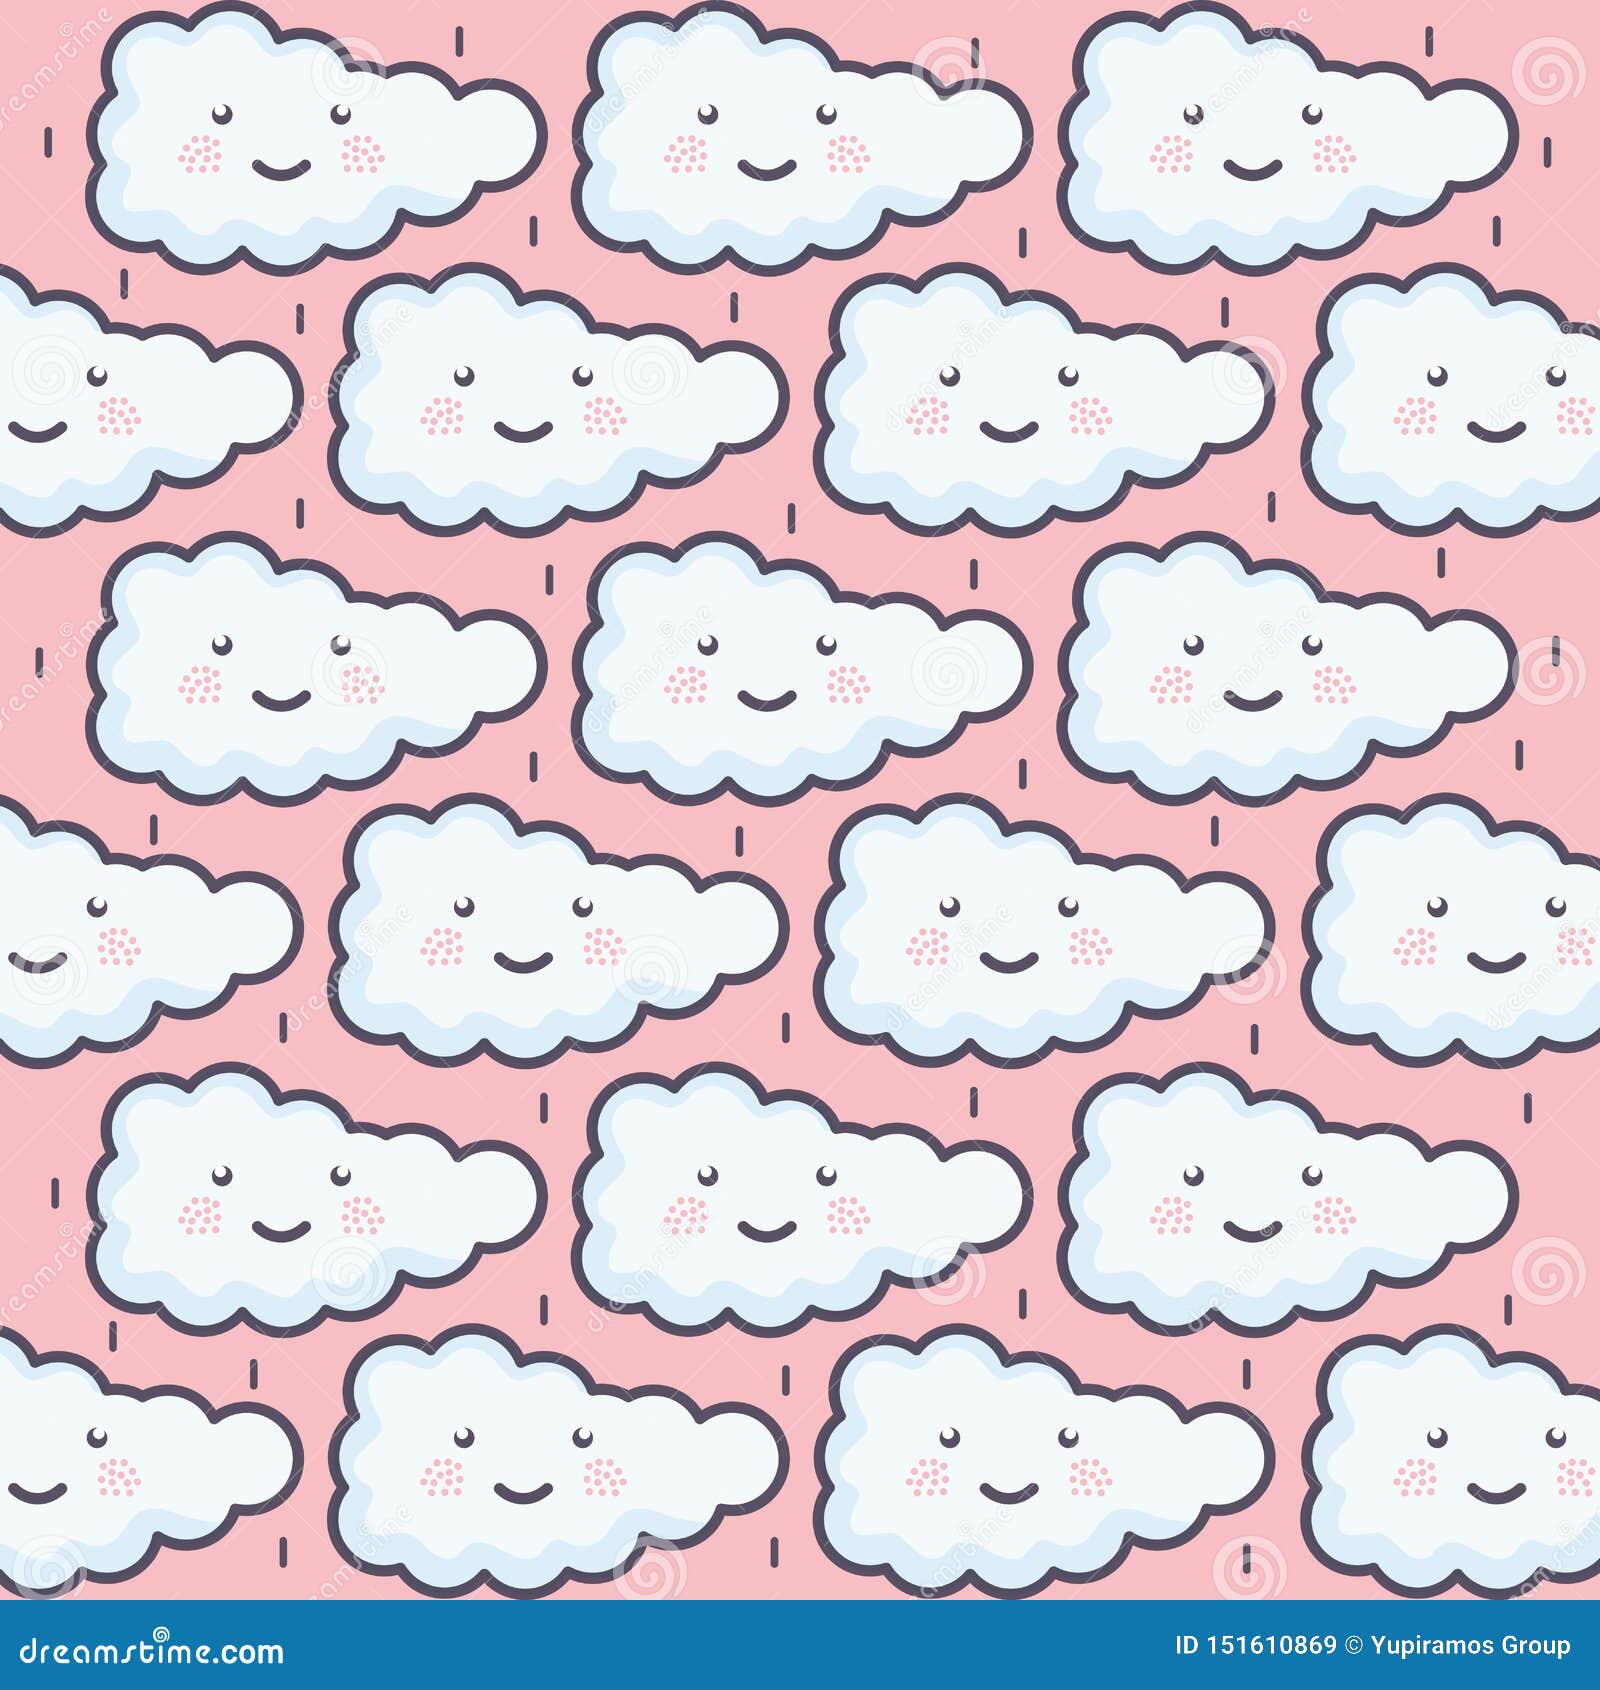 clouds sky weather kawaii characters pattern